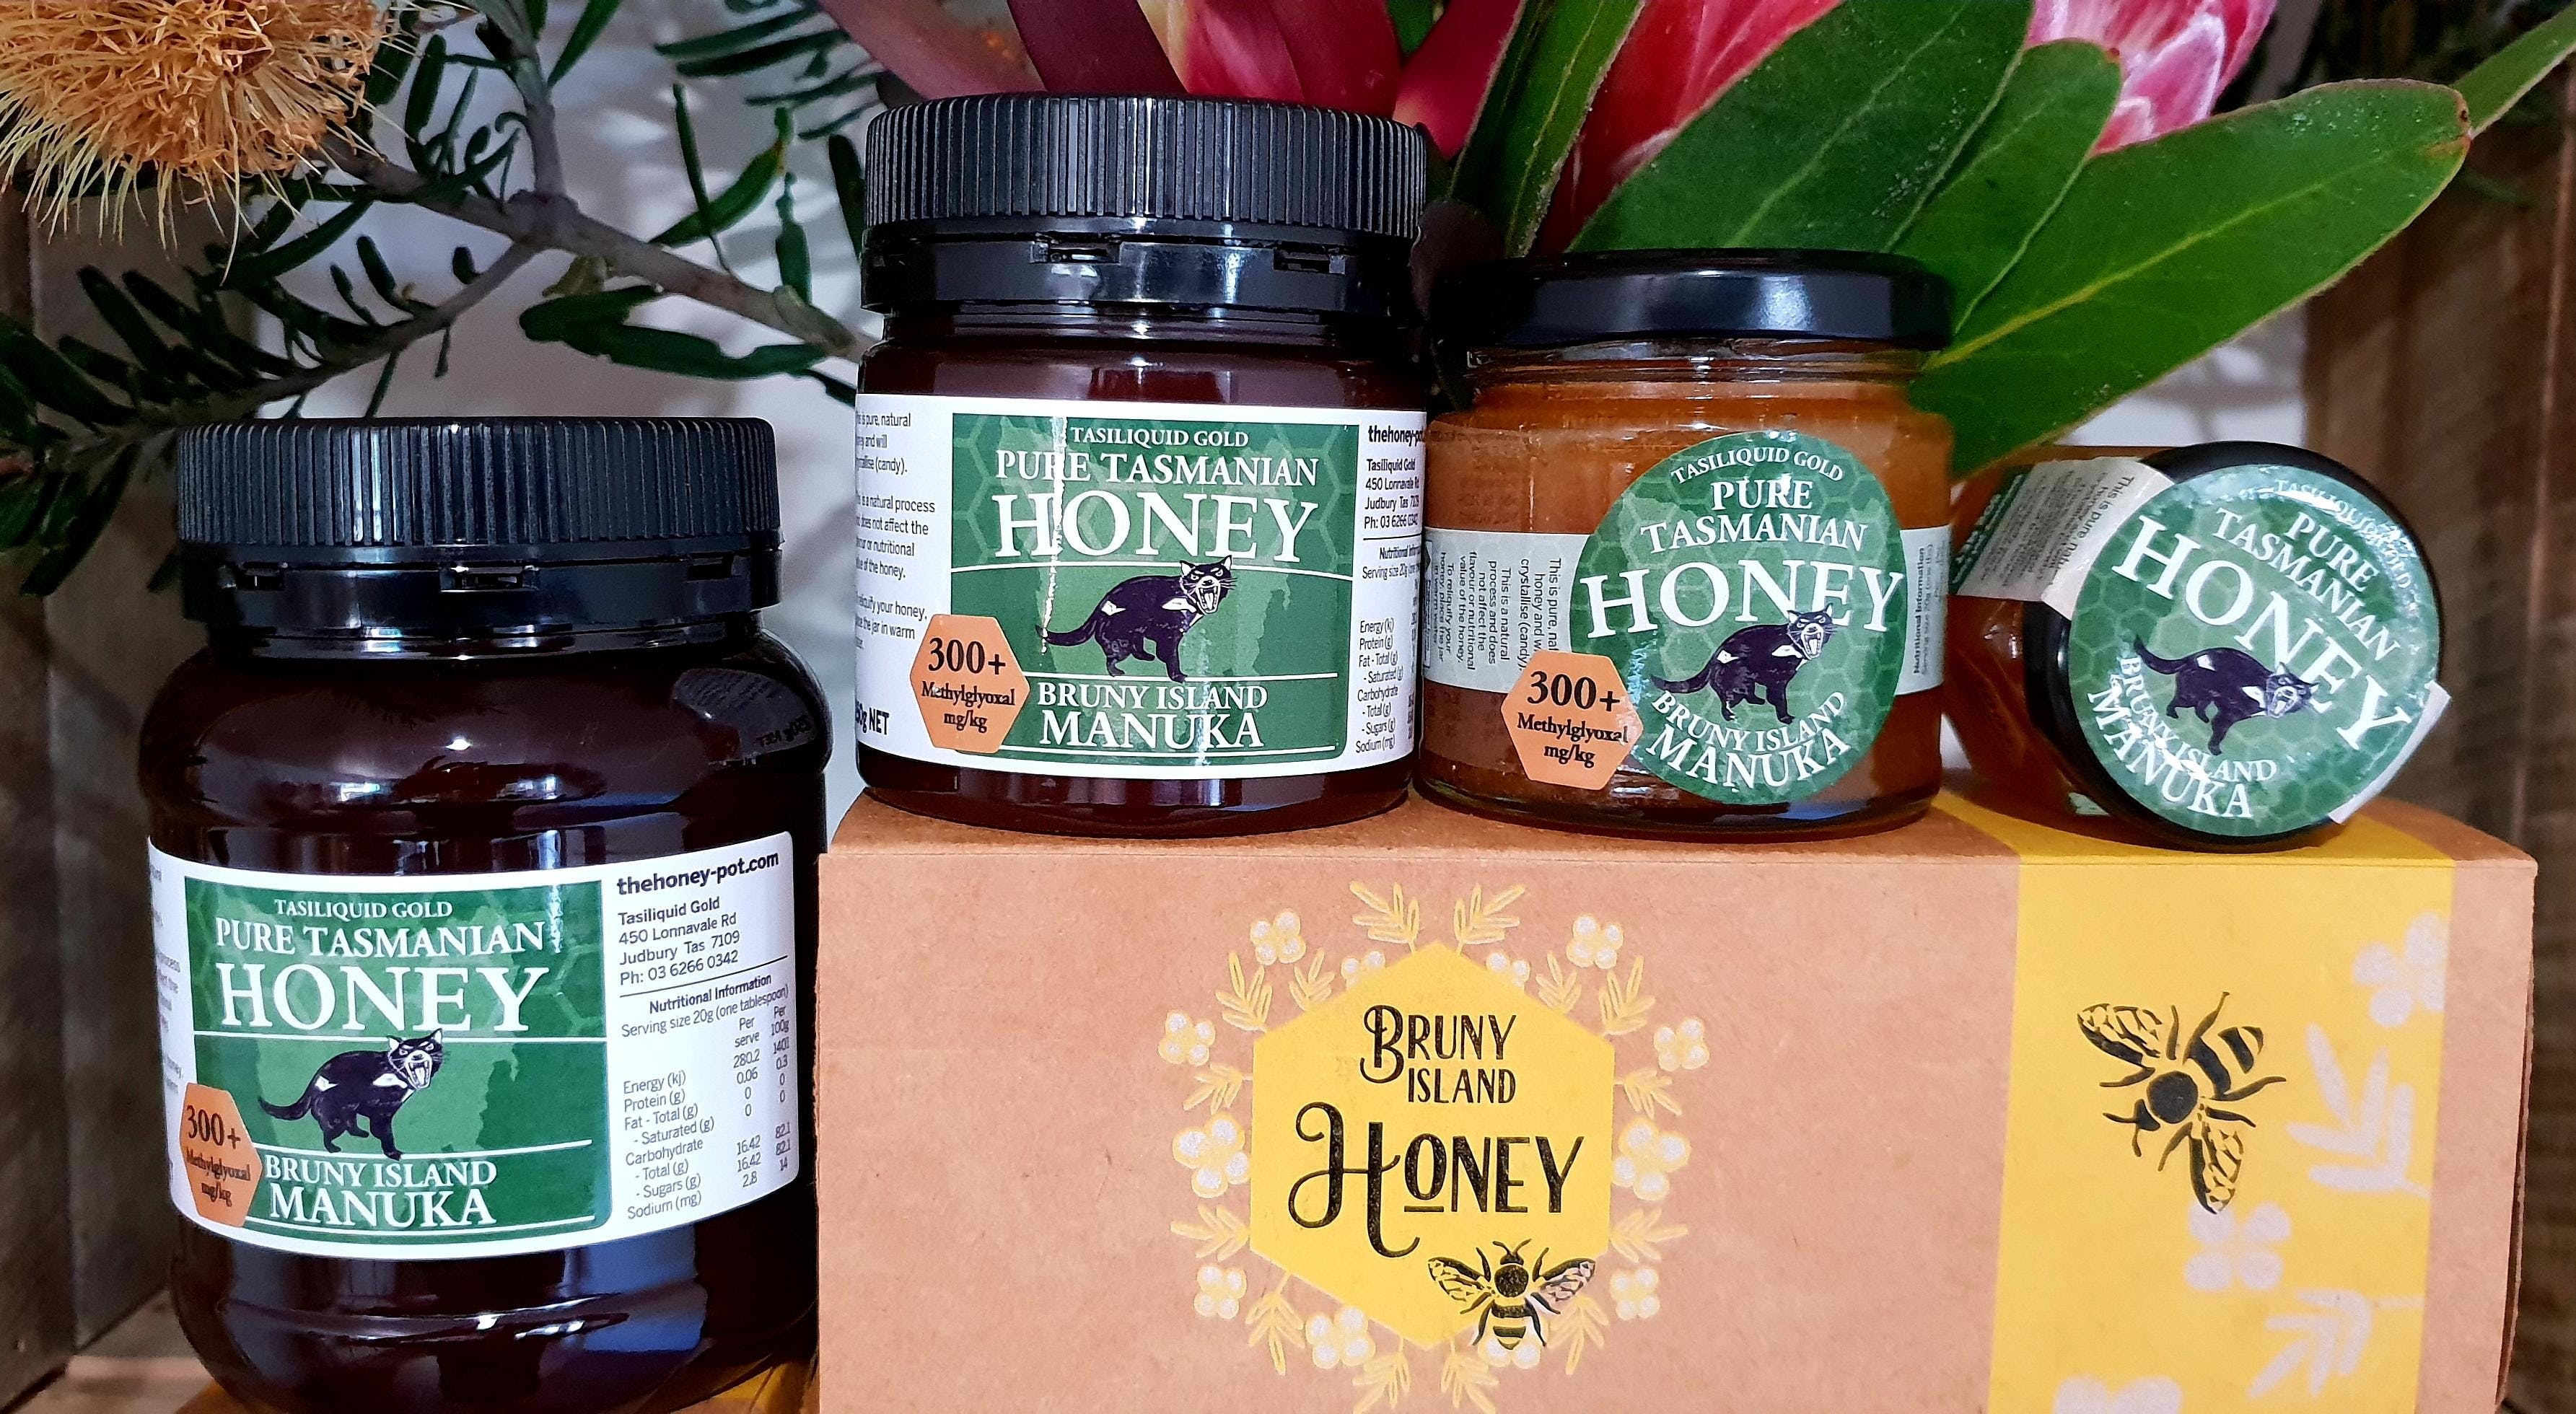 Bruny Island Honey - Attractions